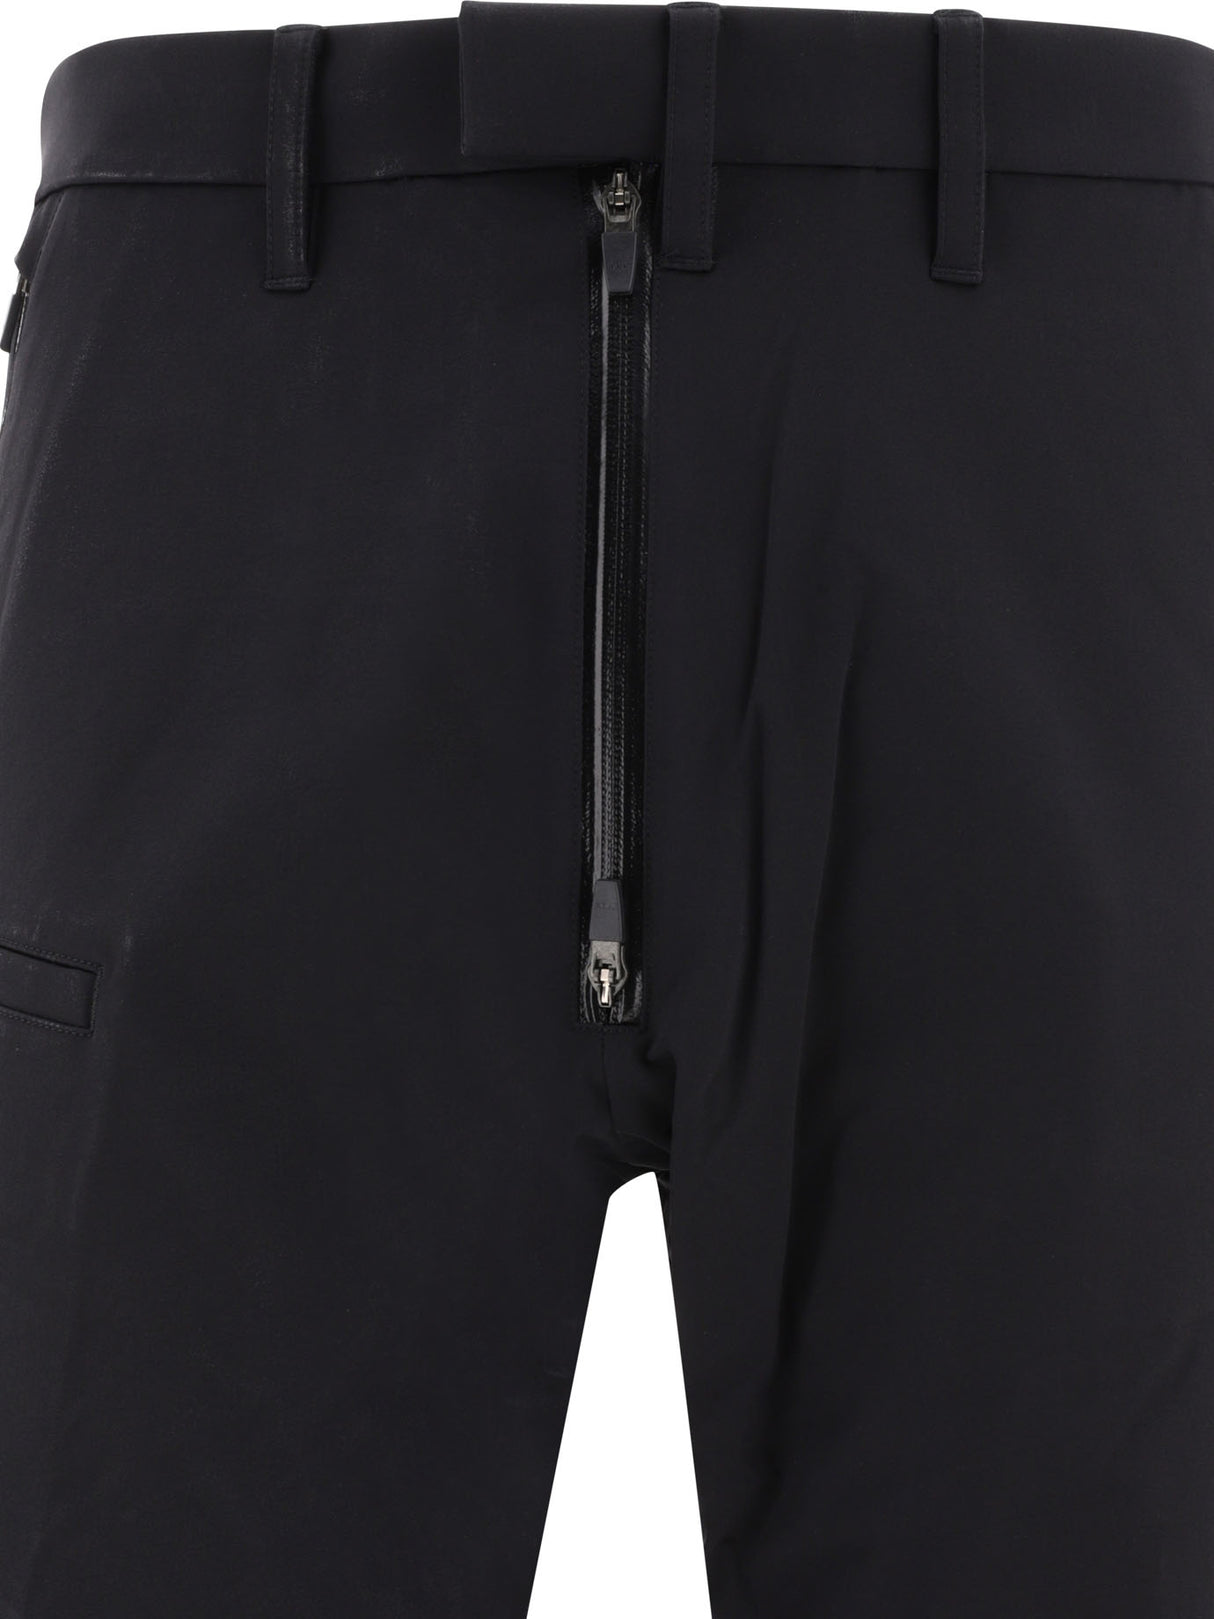 ACRONYM Black P47-DS Trousers for Men